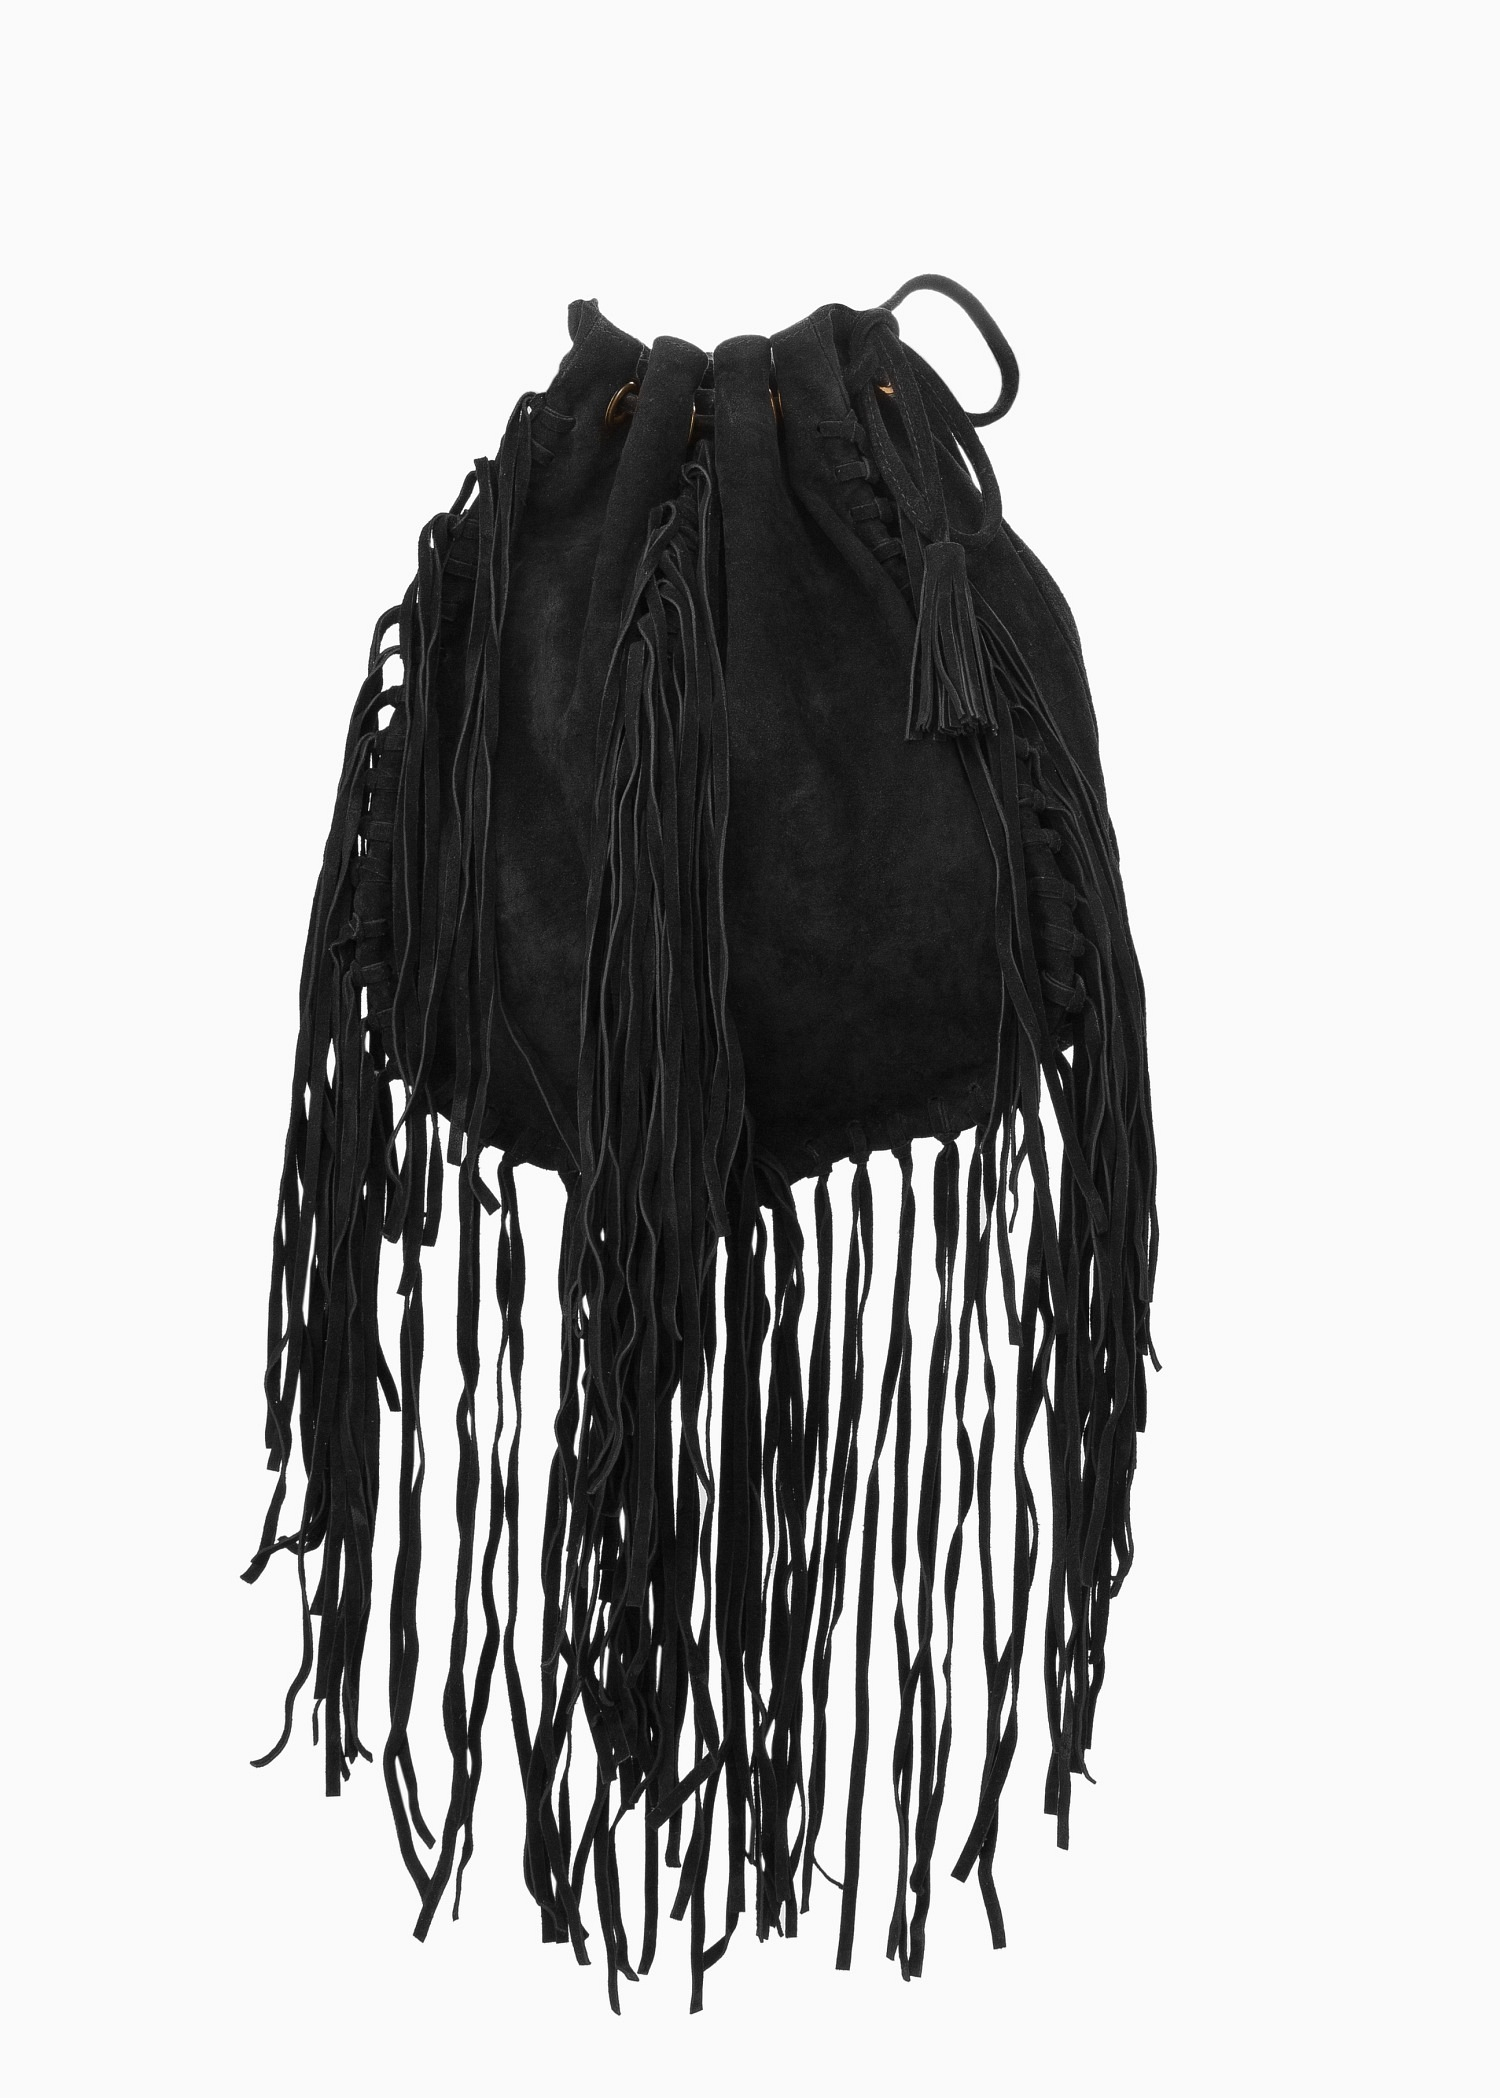 Lyst - Mango Fringe Leather Bag in Black